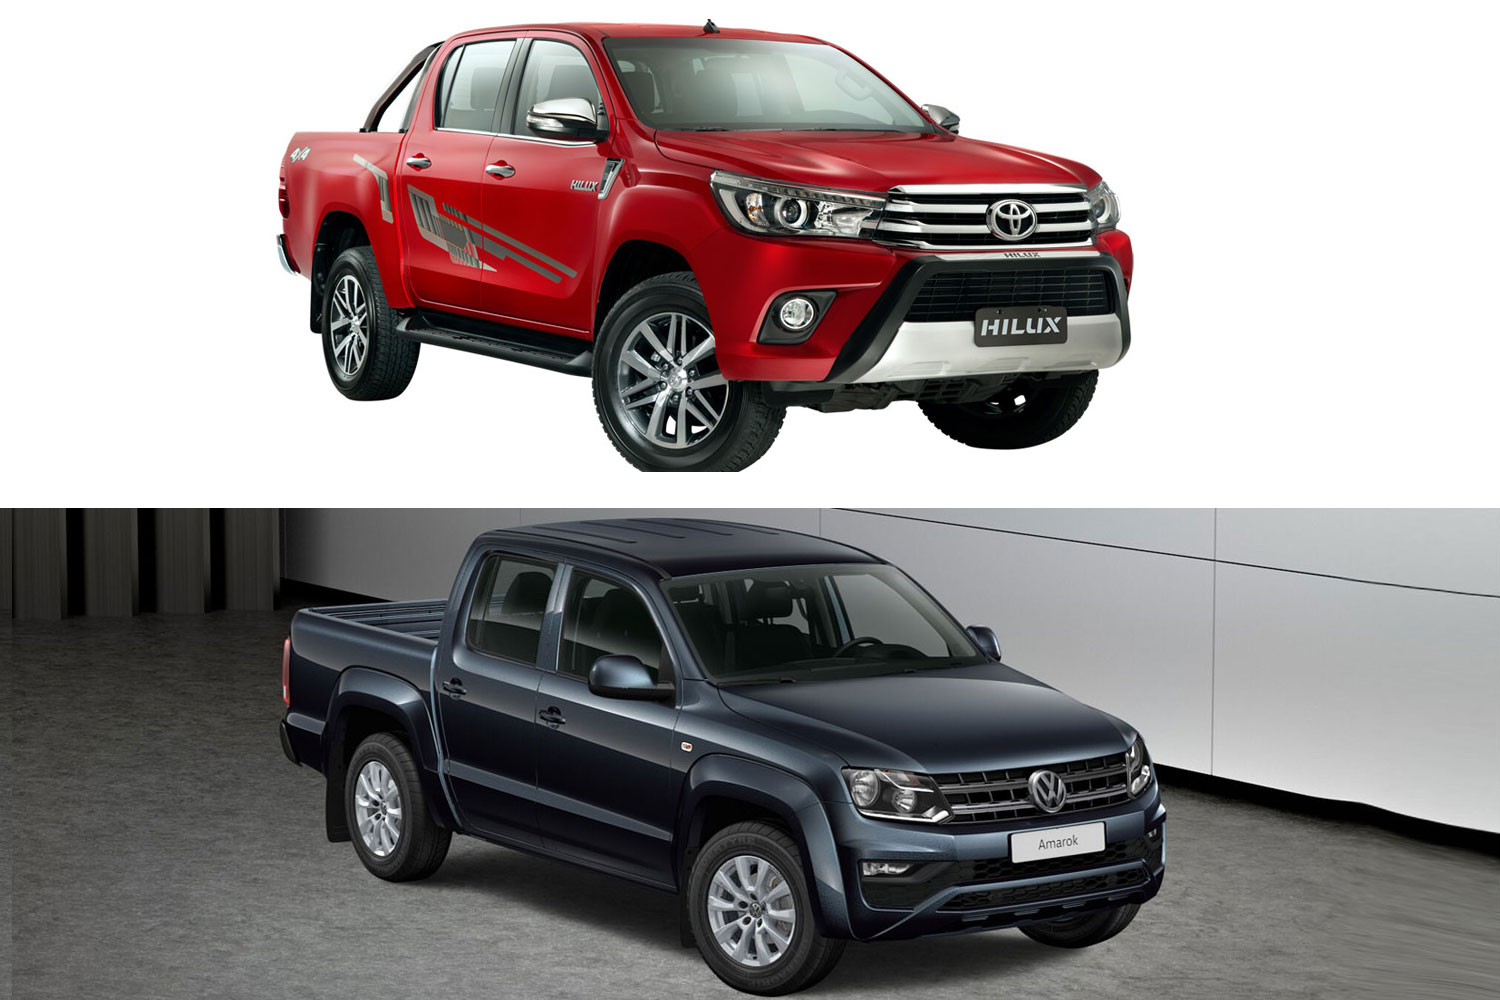 Toyota Hilux vs Volkswagen Amarok